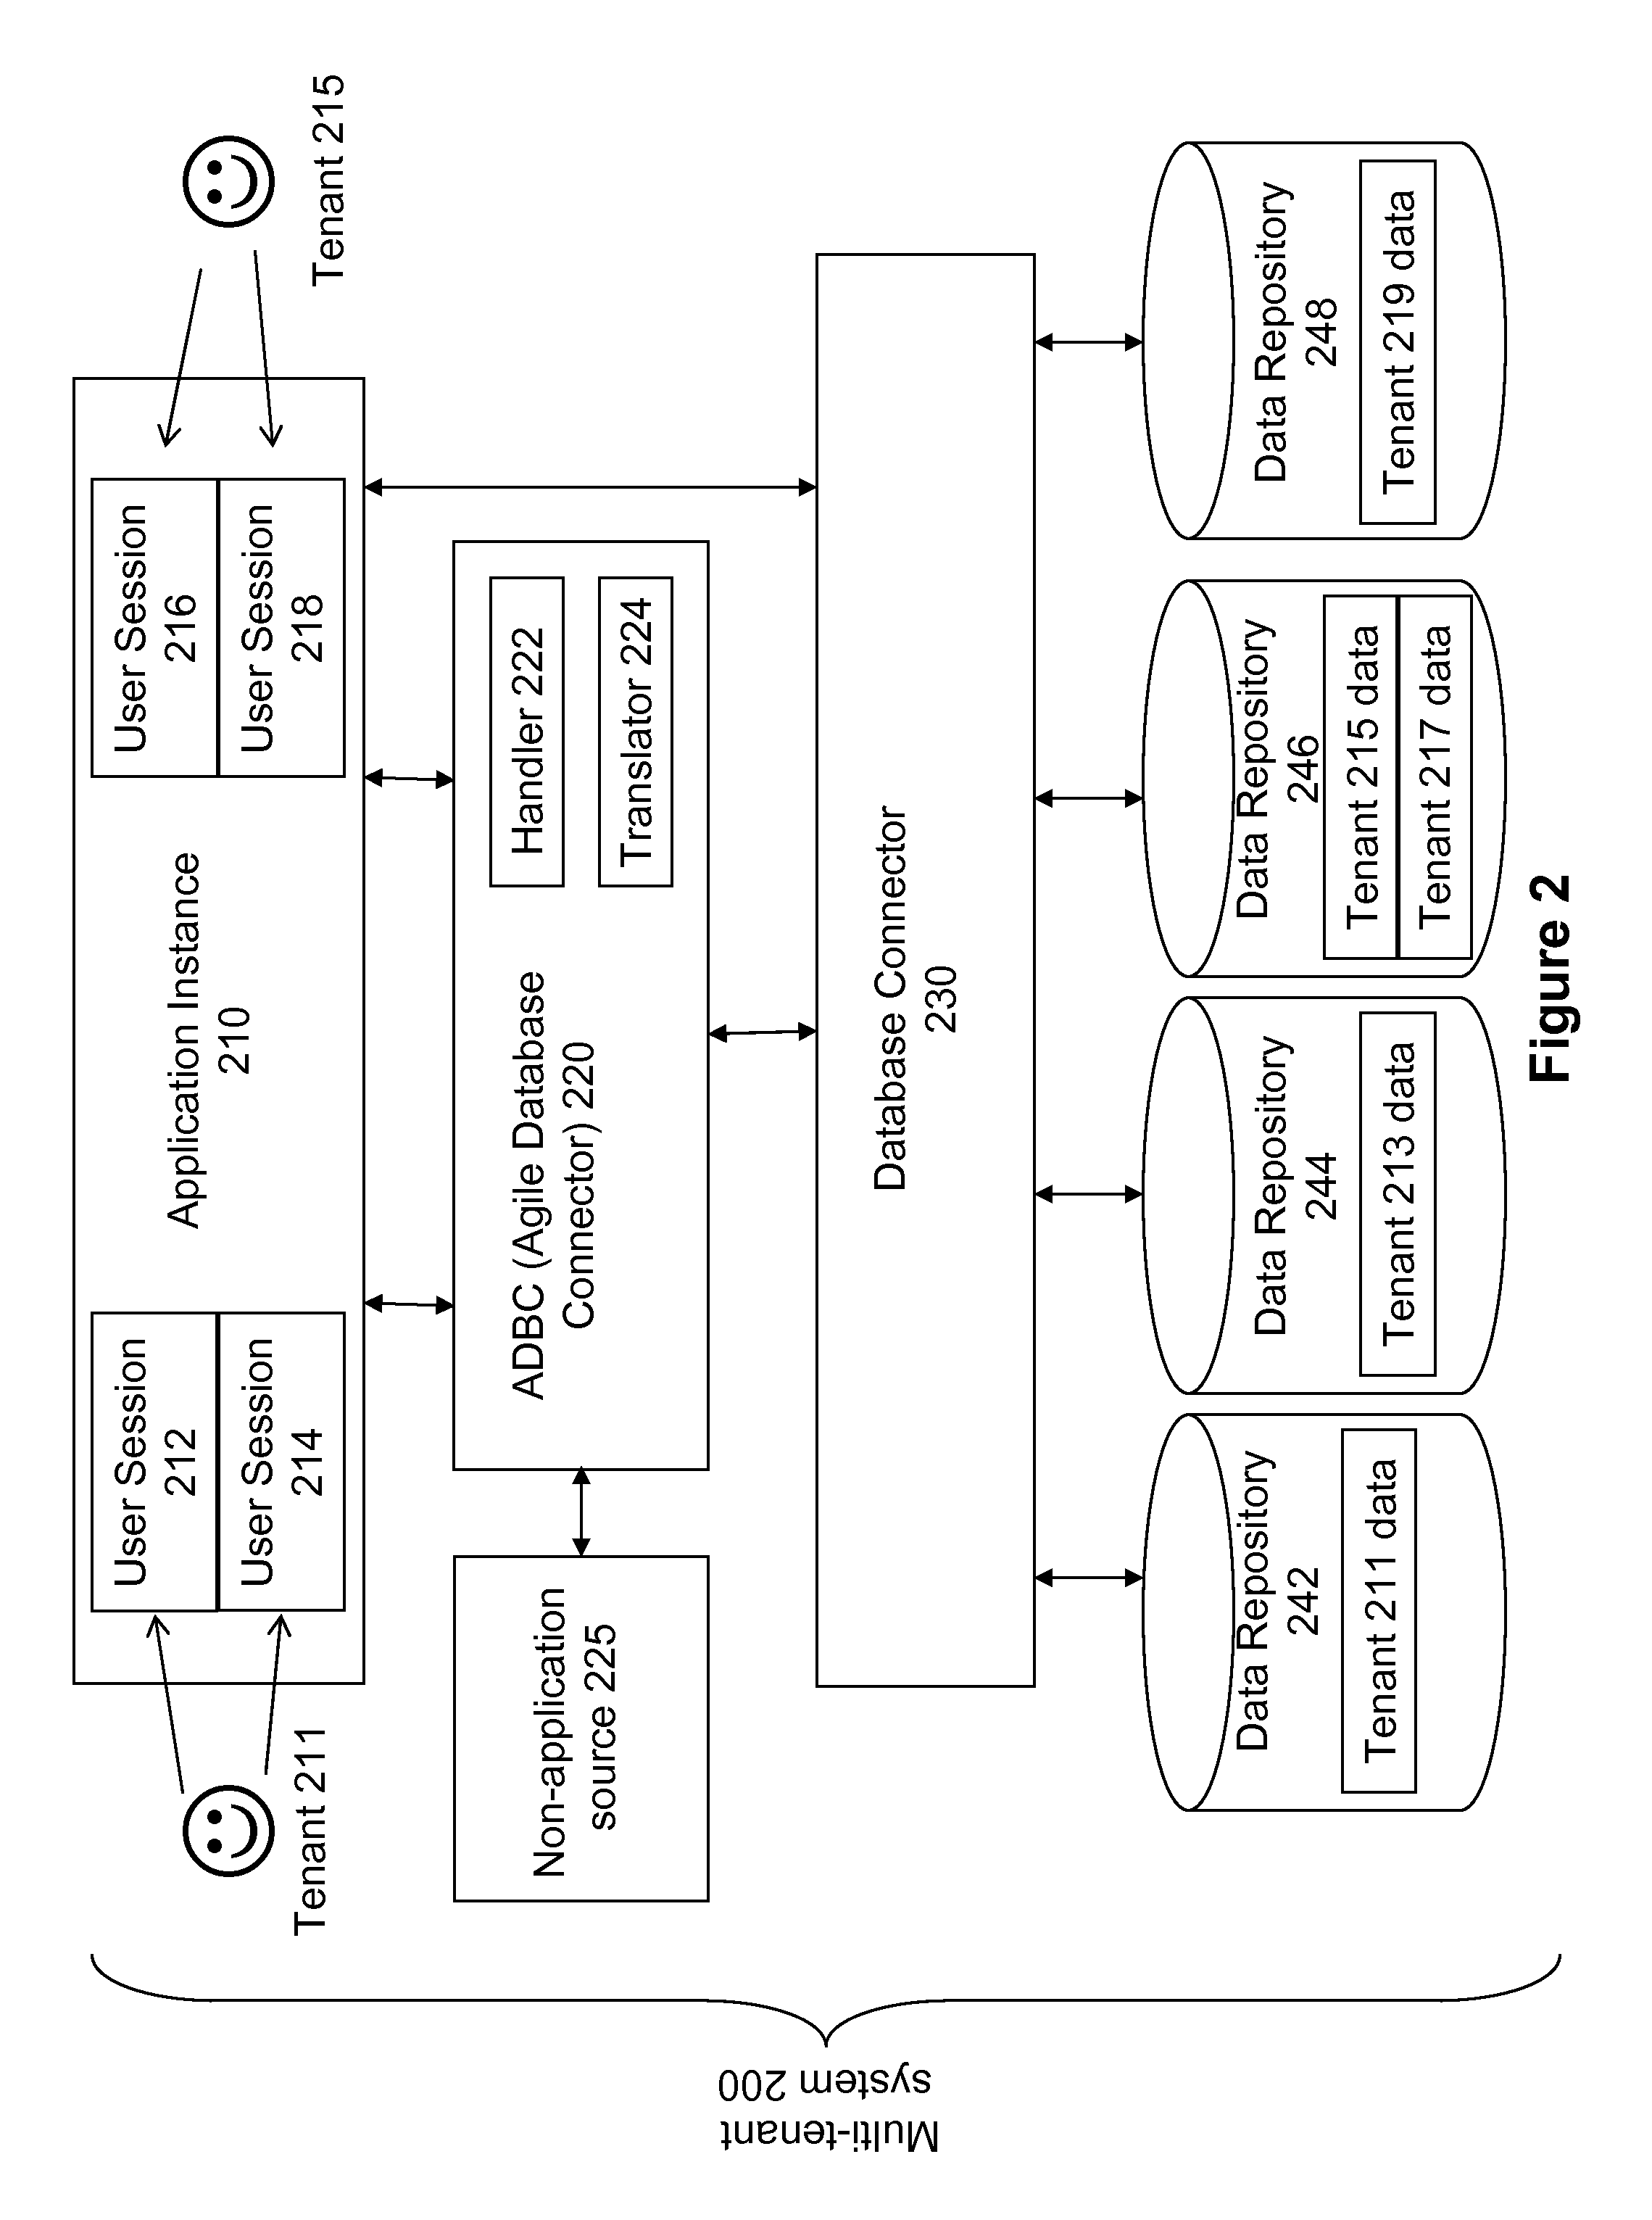 Multi-tenant agile database connector